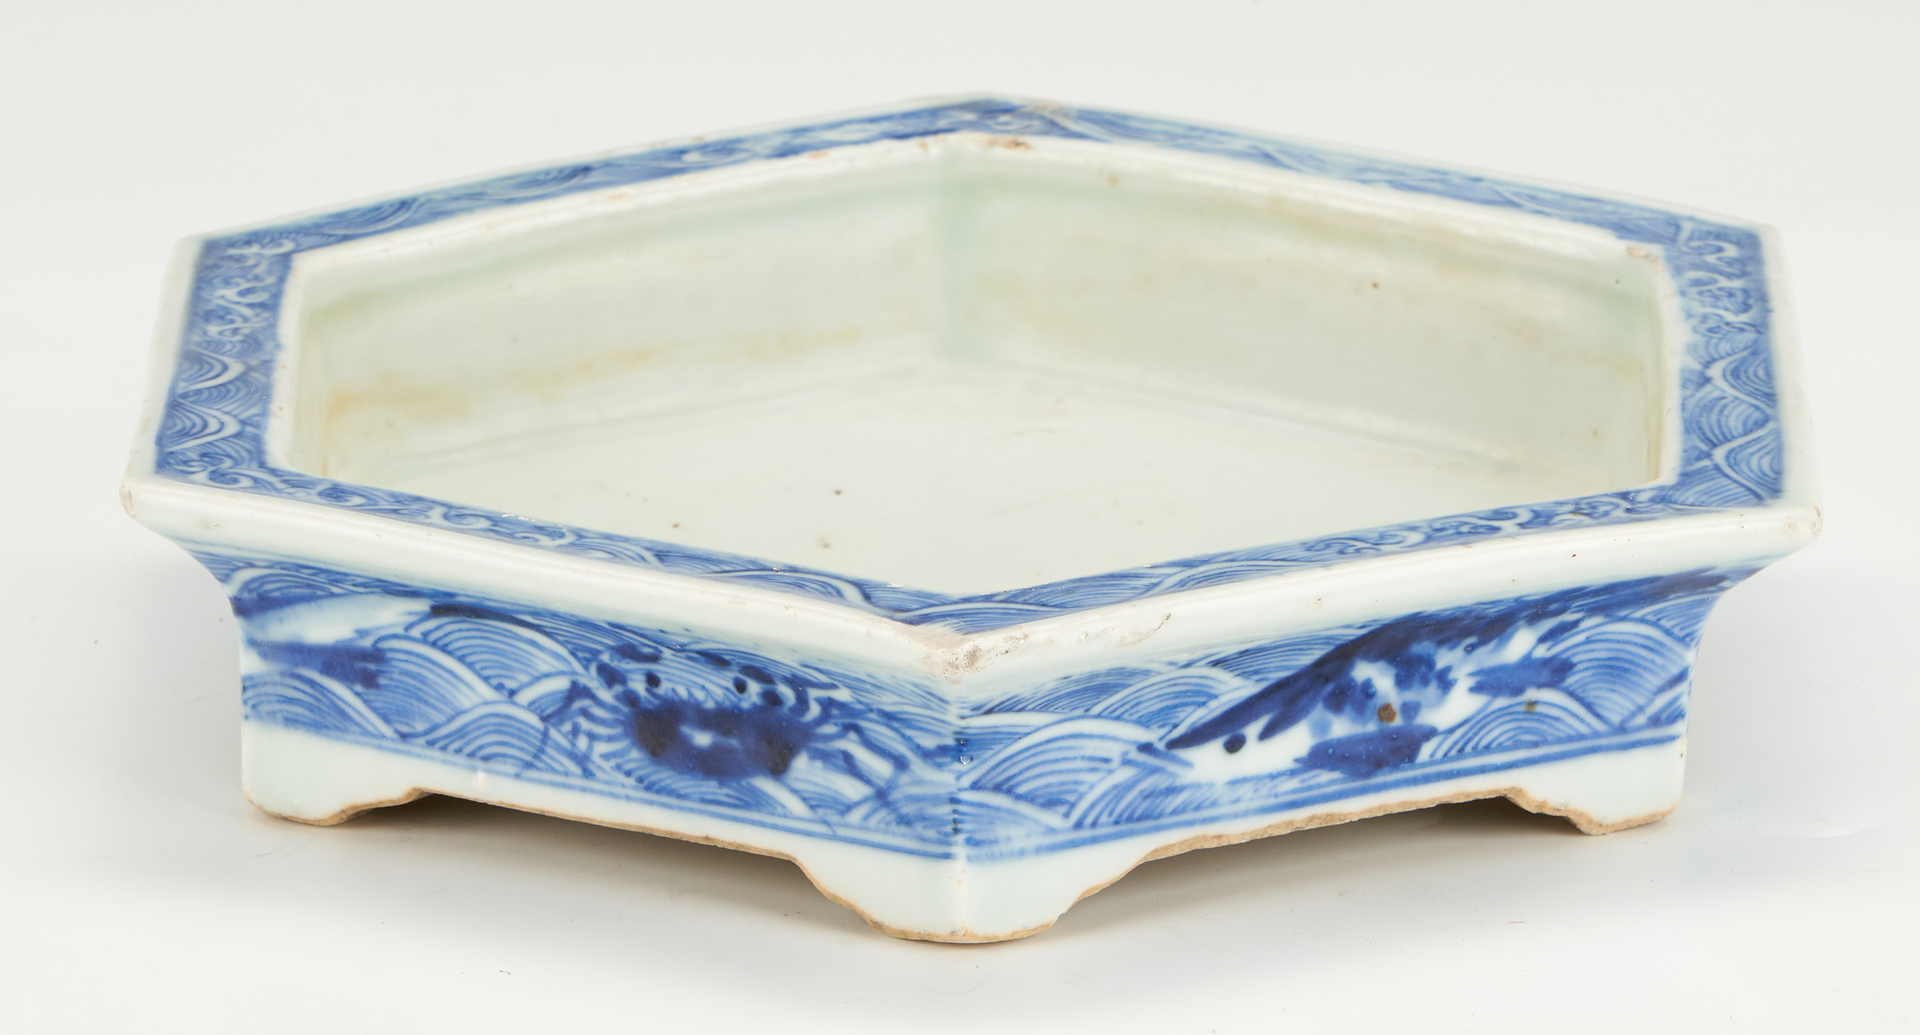 Lot 1083: 3 Armorial Porcelain Plates & 1 Blue and White Dish (4 pcs)